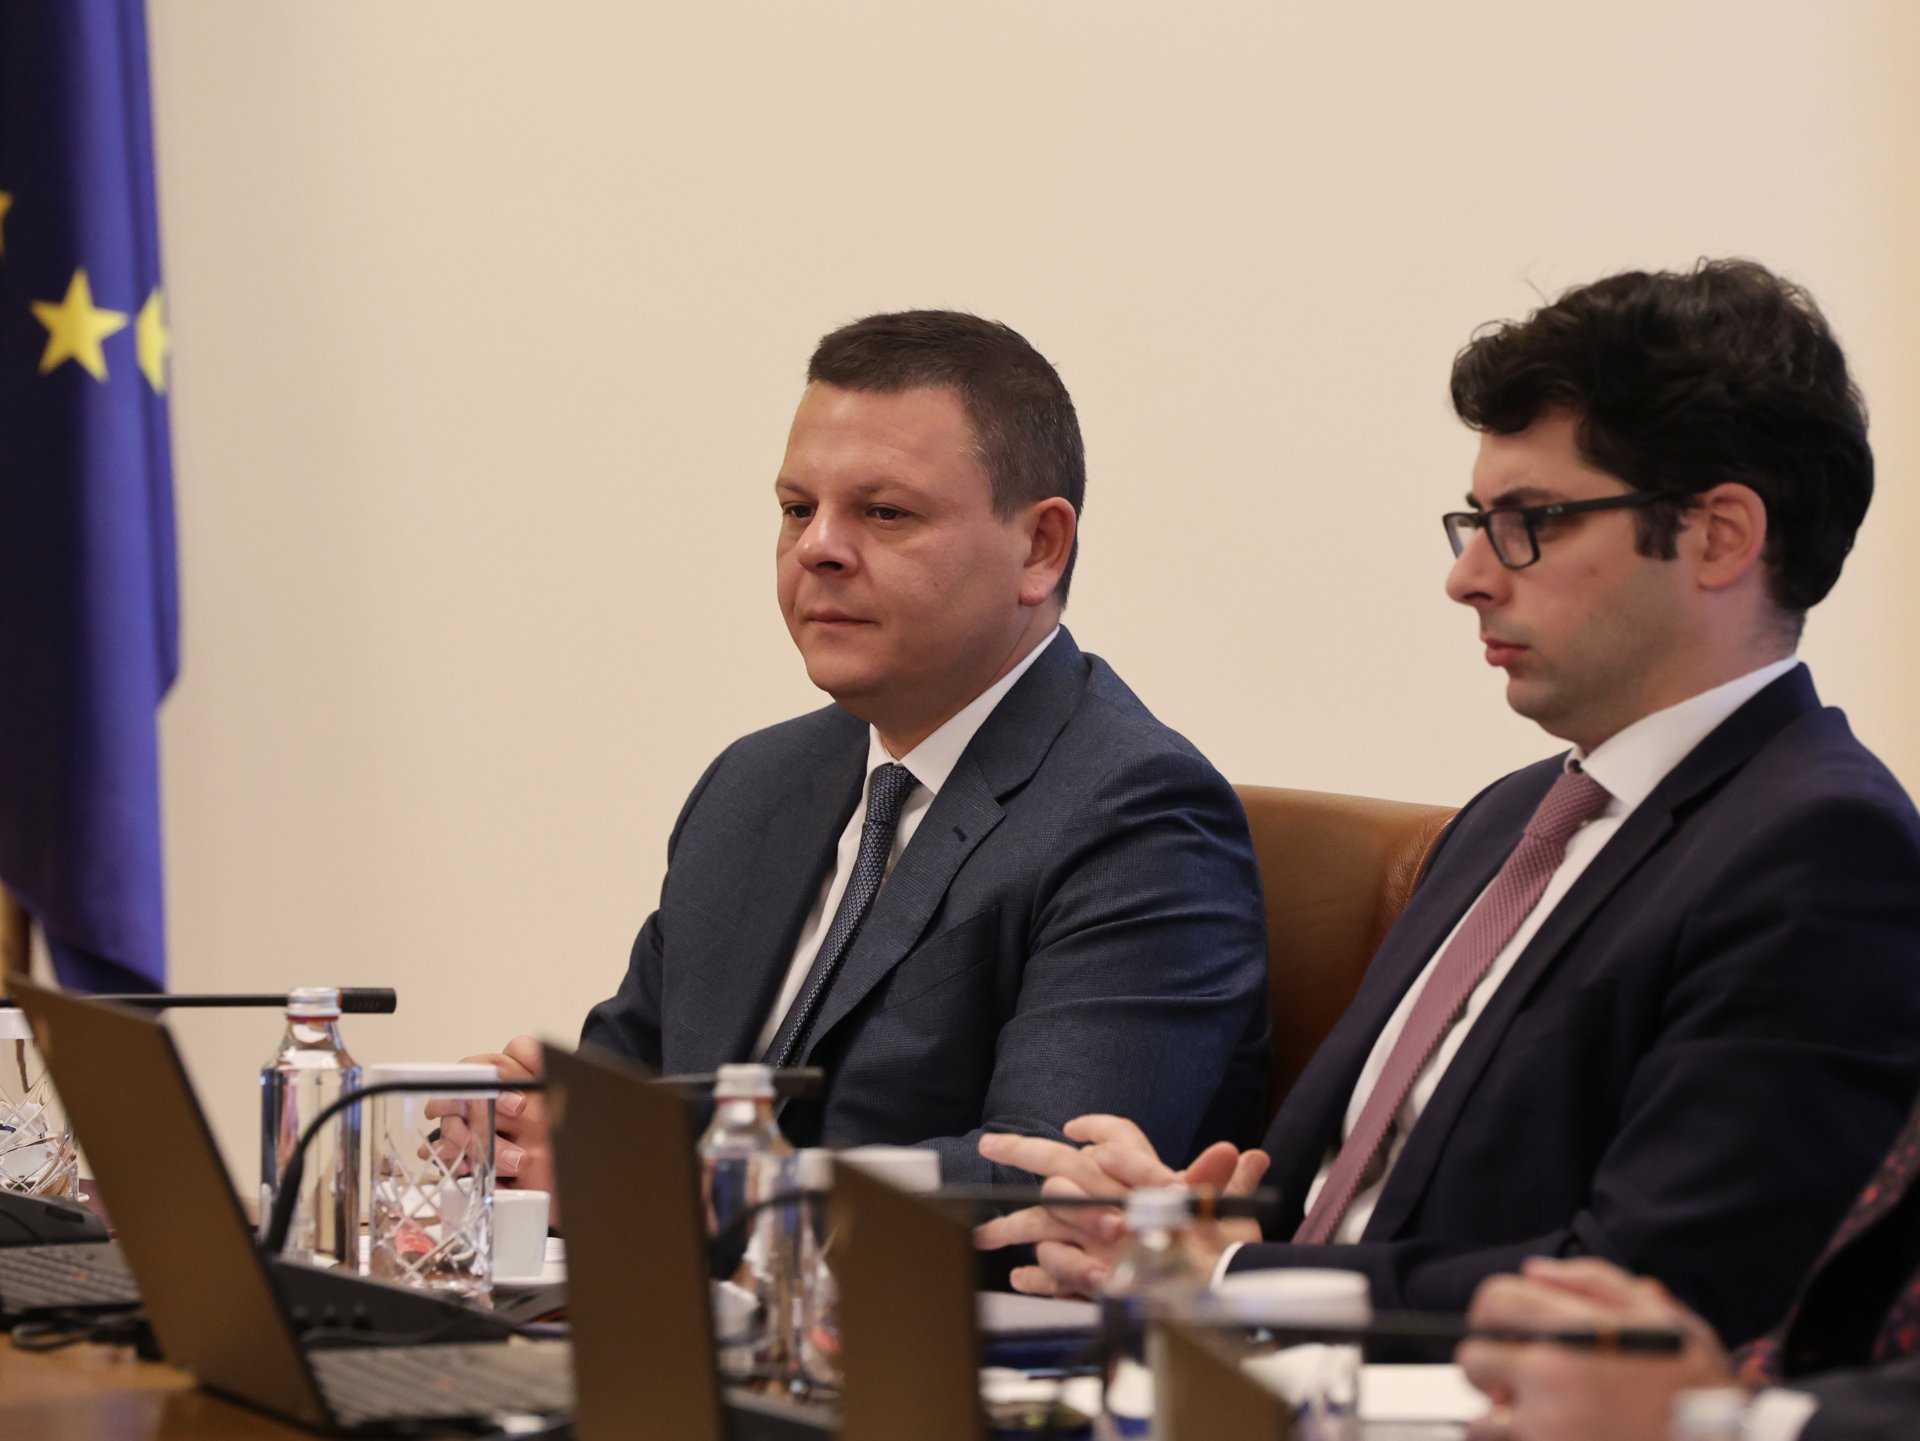 Христо Алексиев (вляво) на Атанас Пеканов: Очаквам в конкурсите да участват кандидати с опит, експертиза и висок професионализъм